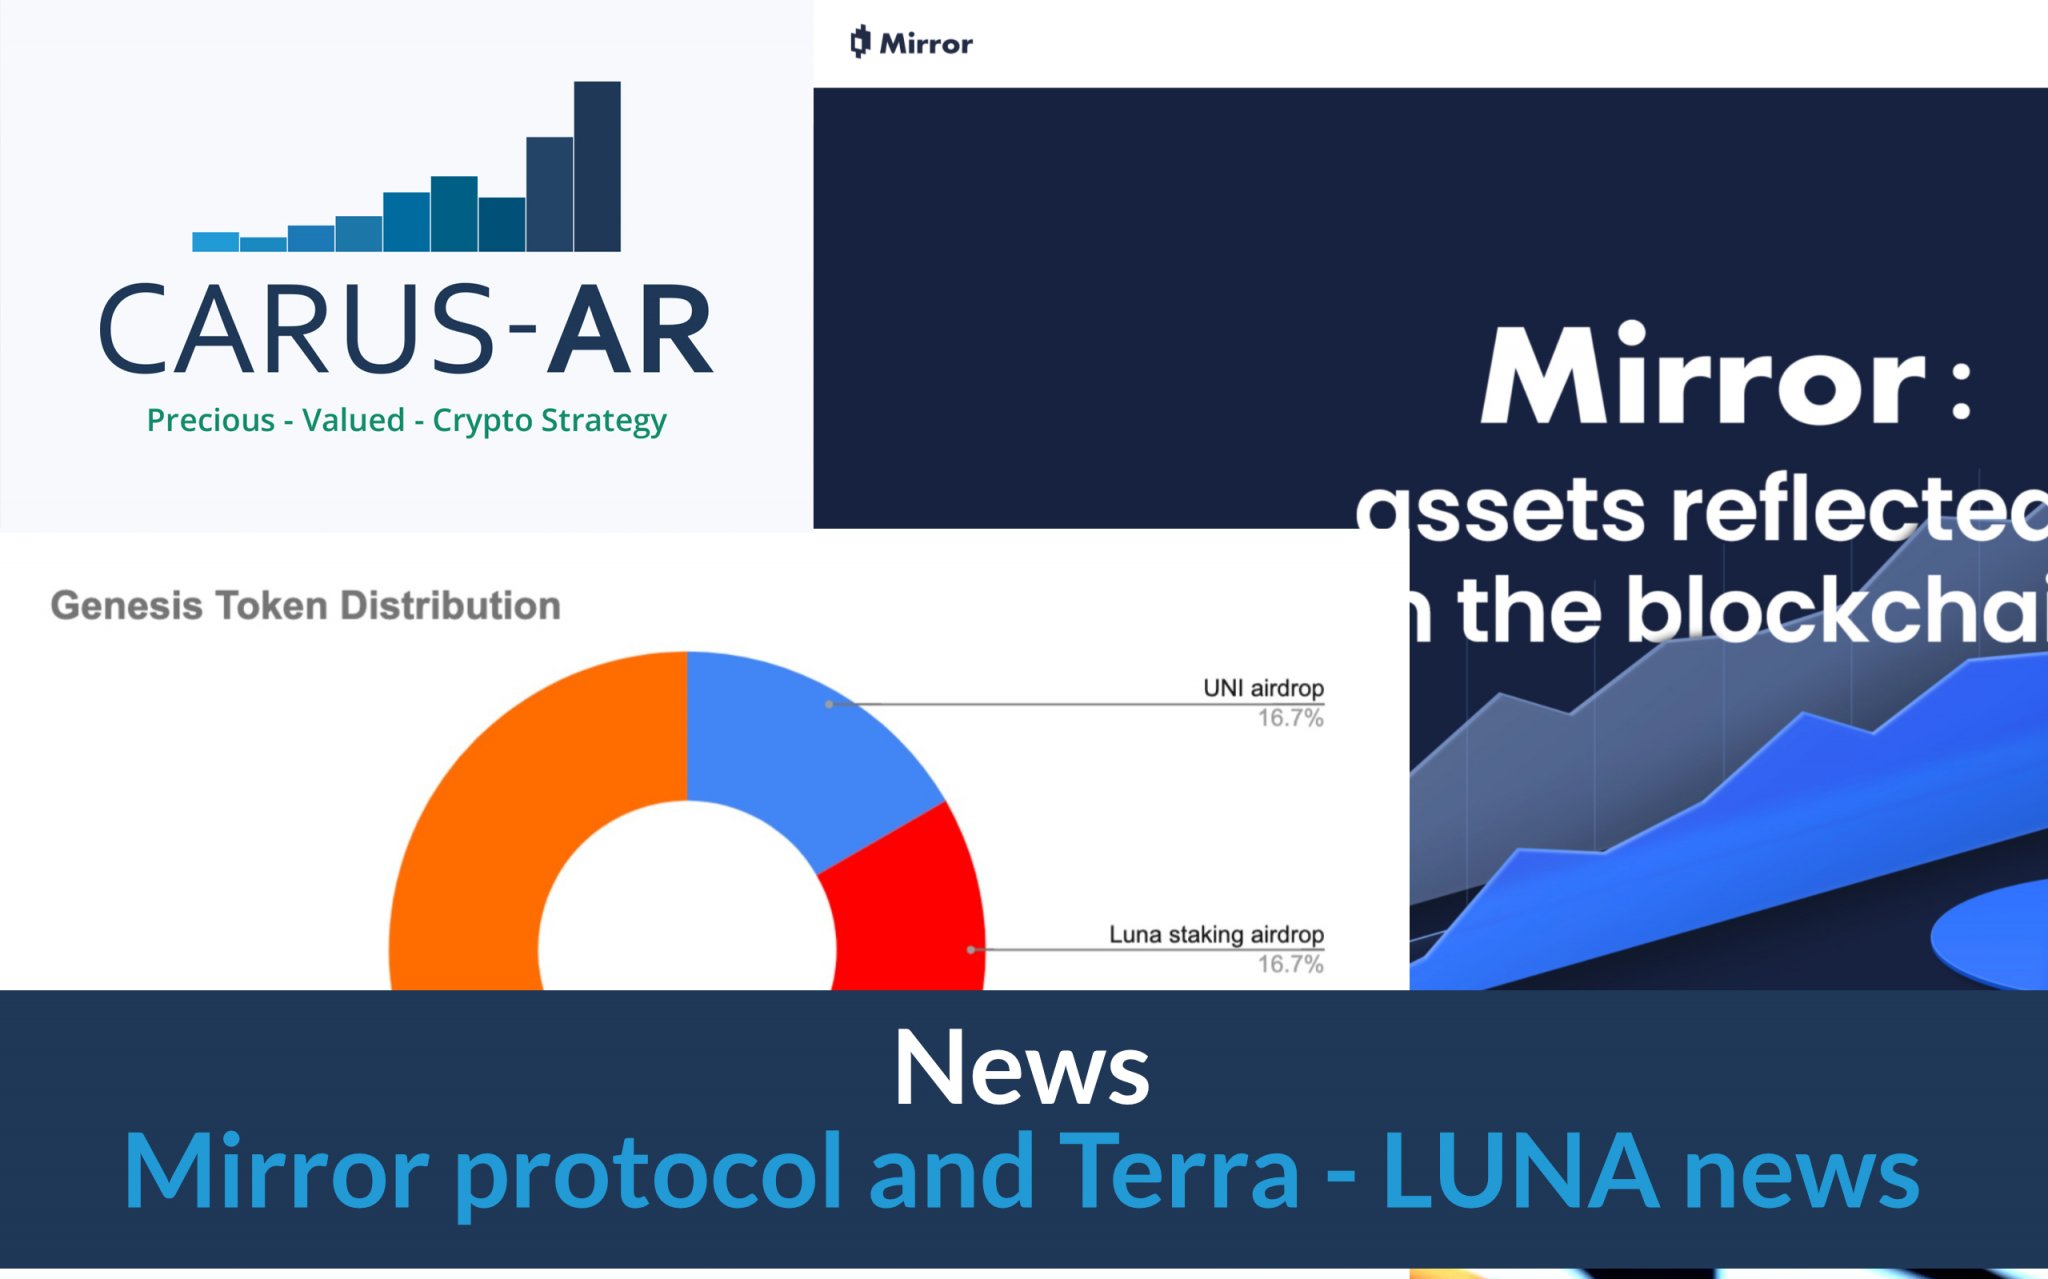 Mirror protocol and Terra - LUNA news